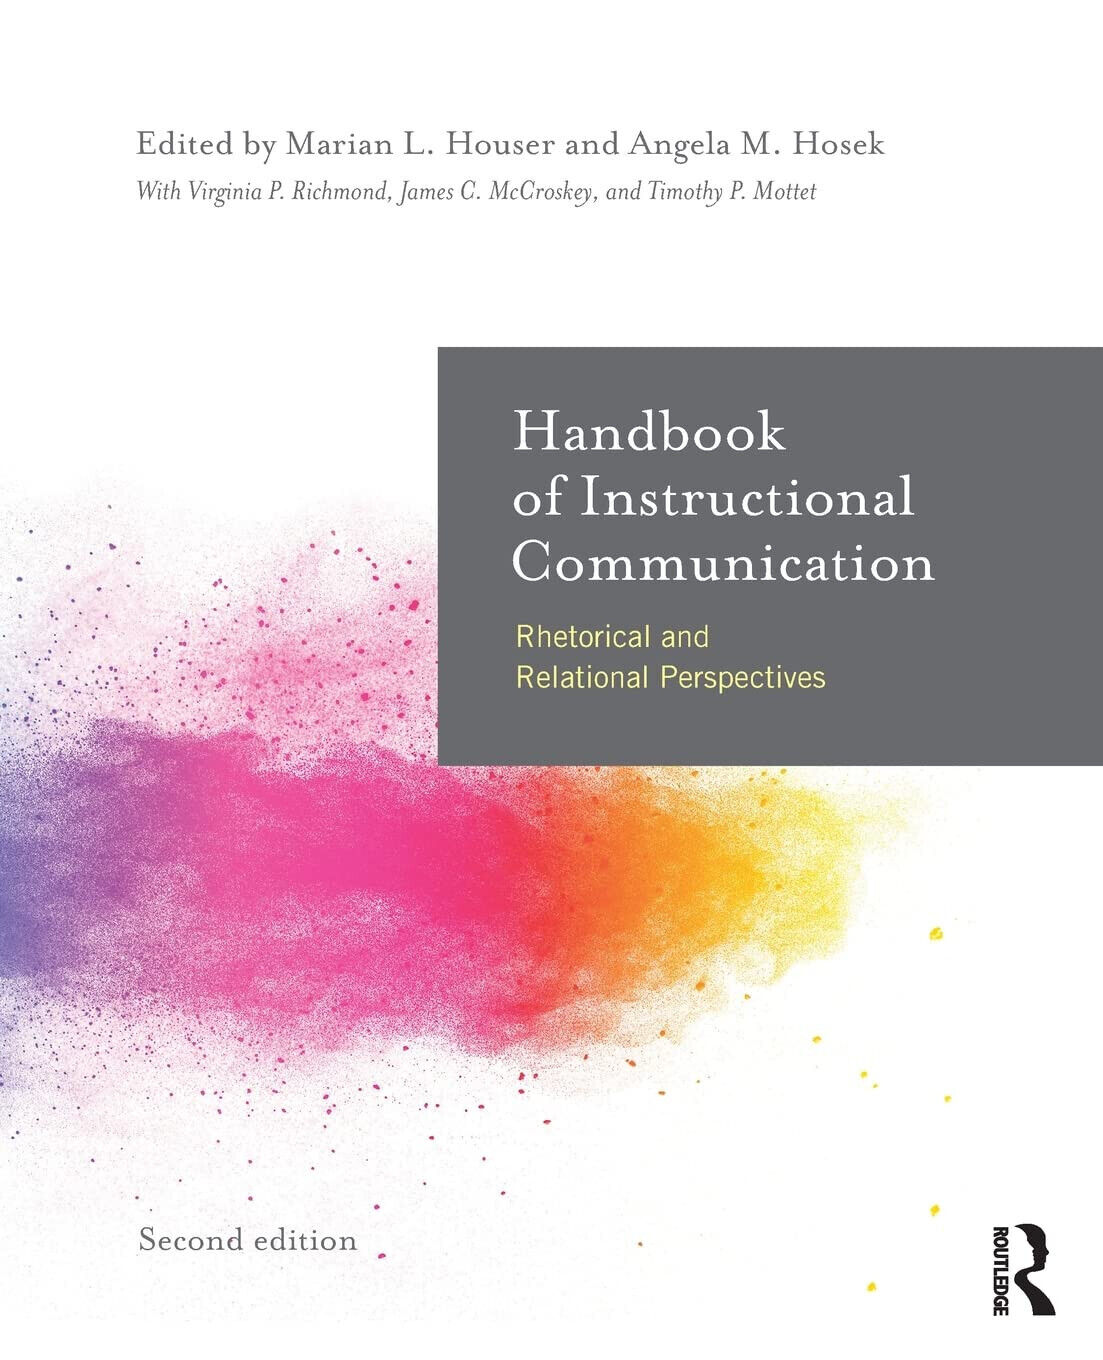 Handbook of Instructional Communication - Marian L Houser - Routledge, 2017